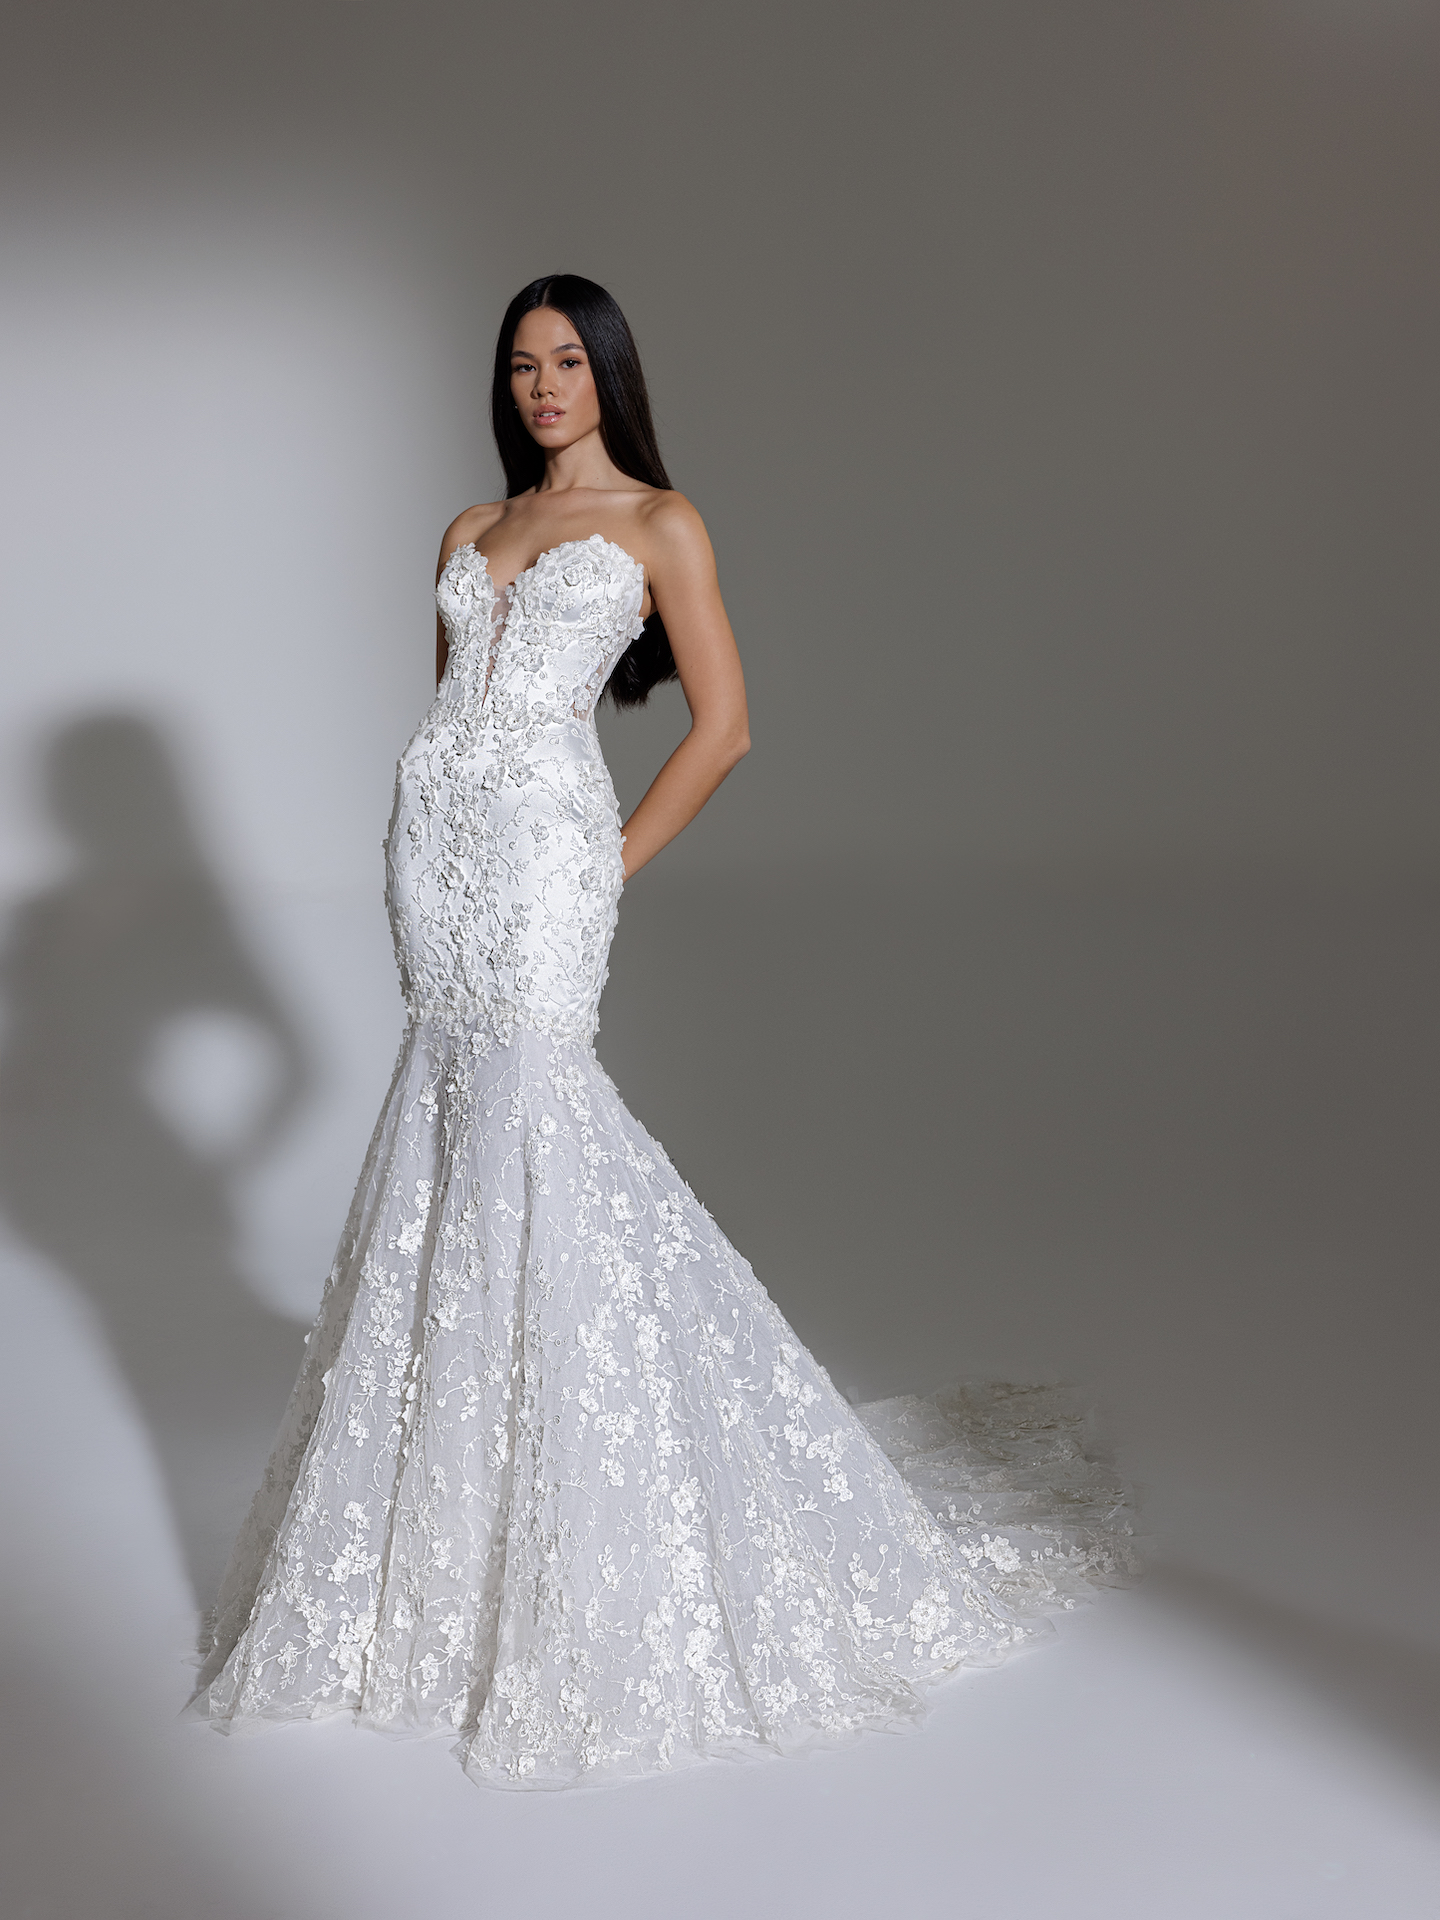 Strapless Deep V Illusion Neckline Floral Lace Mermaid Wedding Dress Kleinfeld Bridal 6658